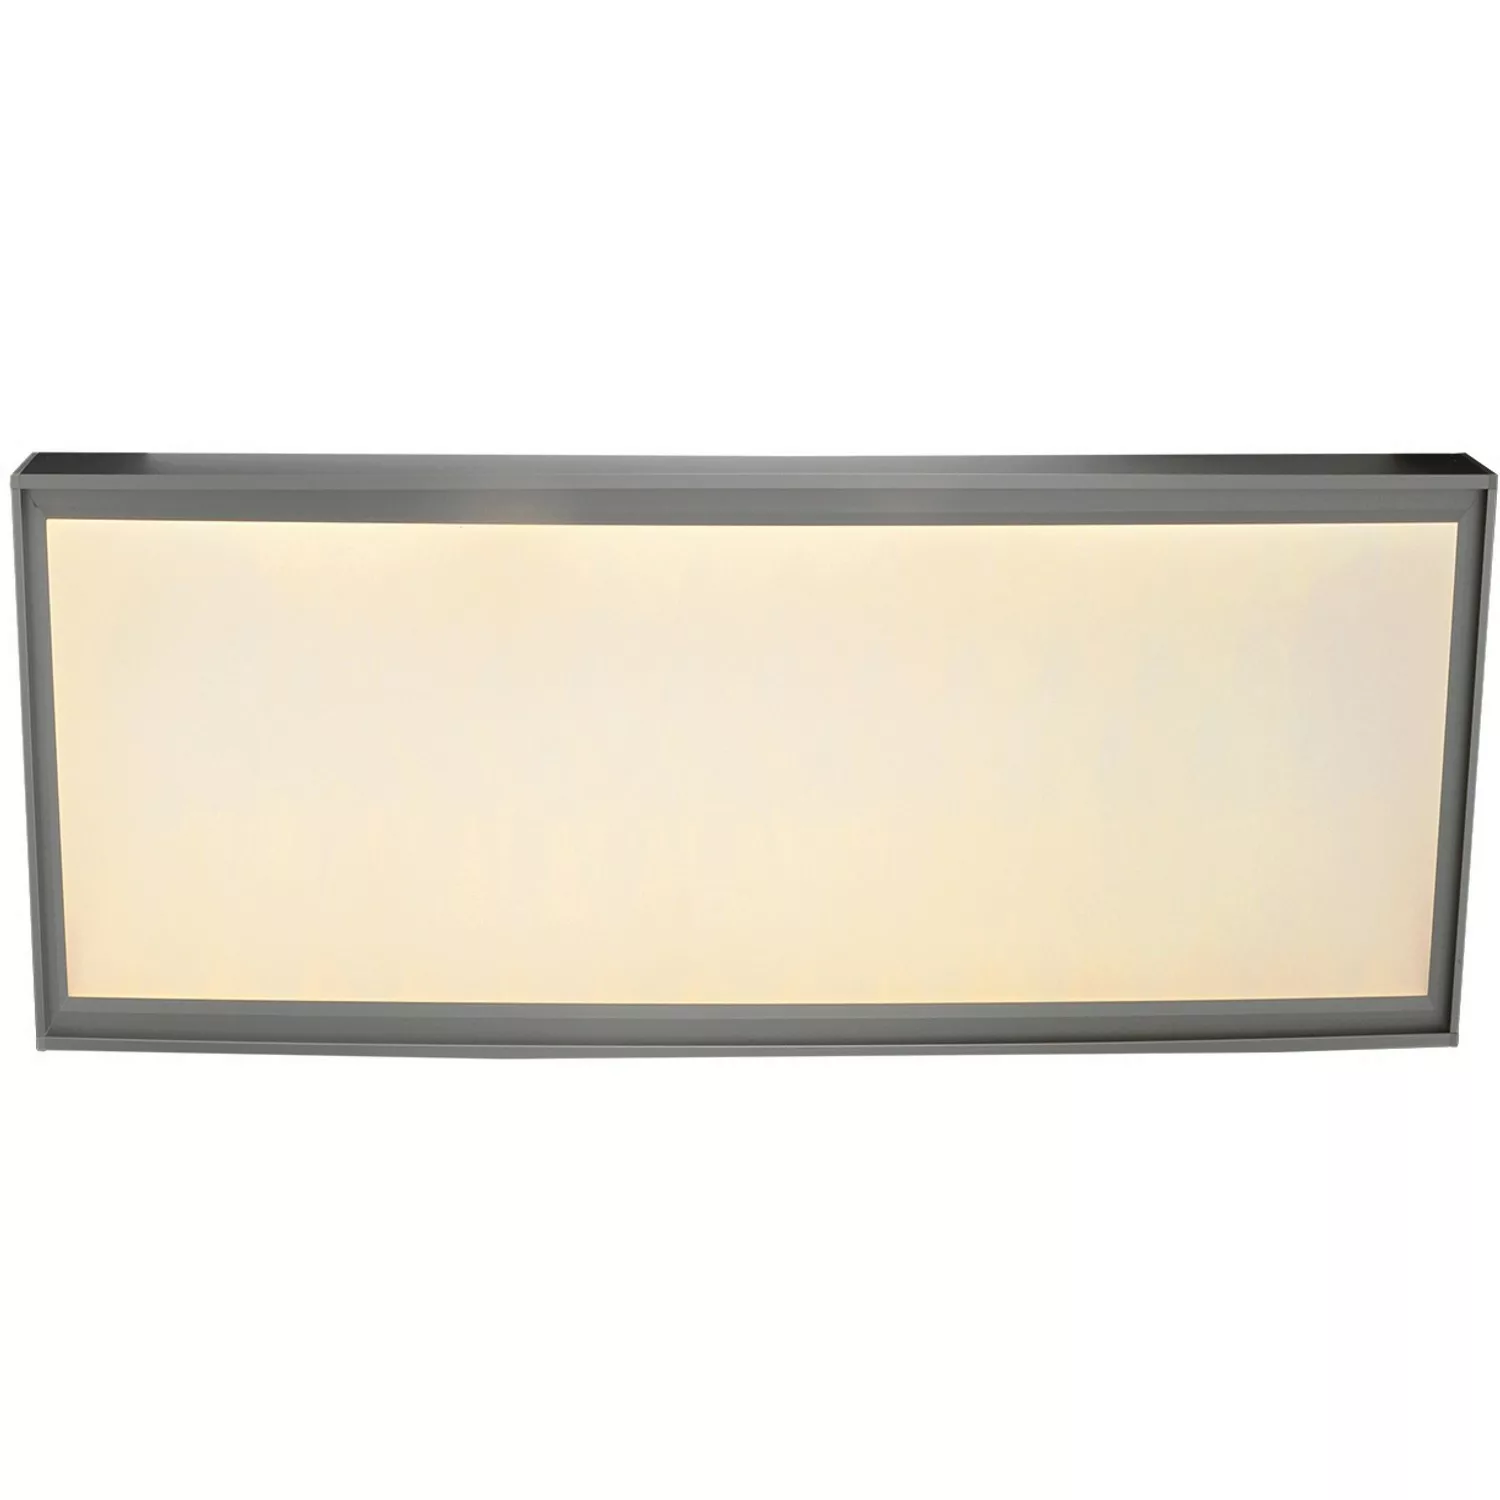 näve LED Panel, 1 flammig-flammig, LED Deckenleuchte, LED Deckenlampe günstig online kaufen